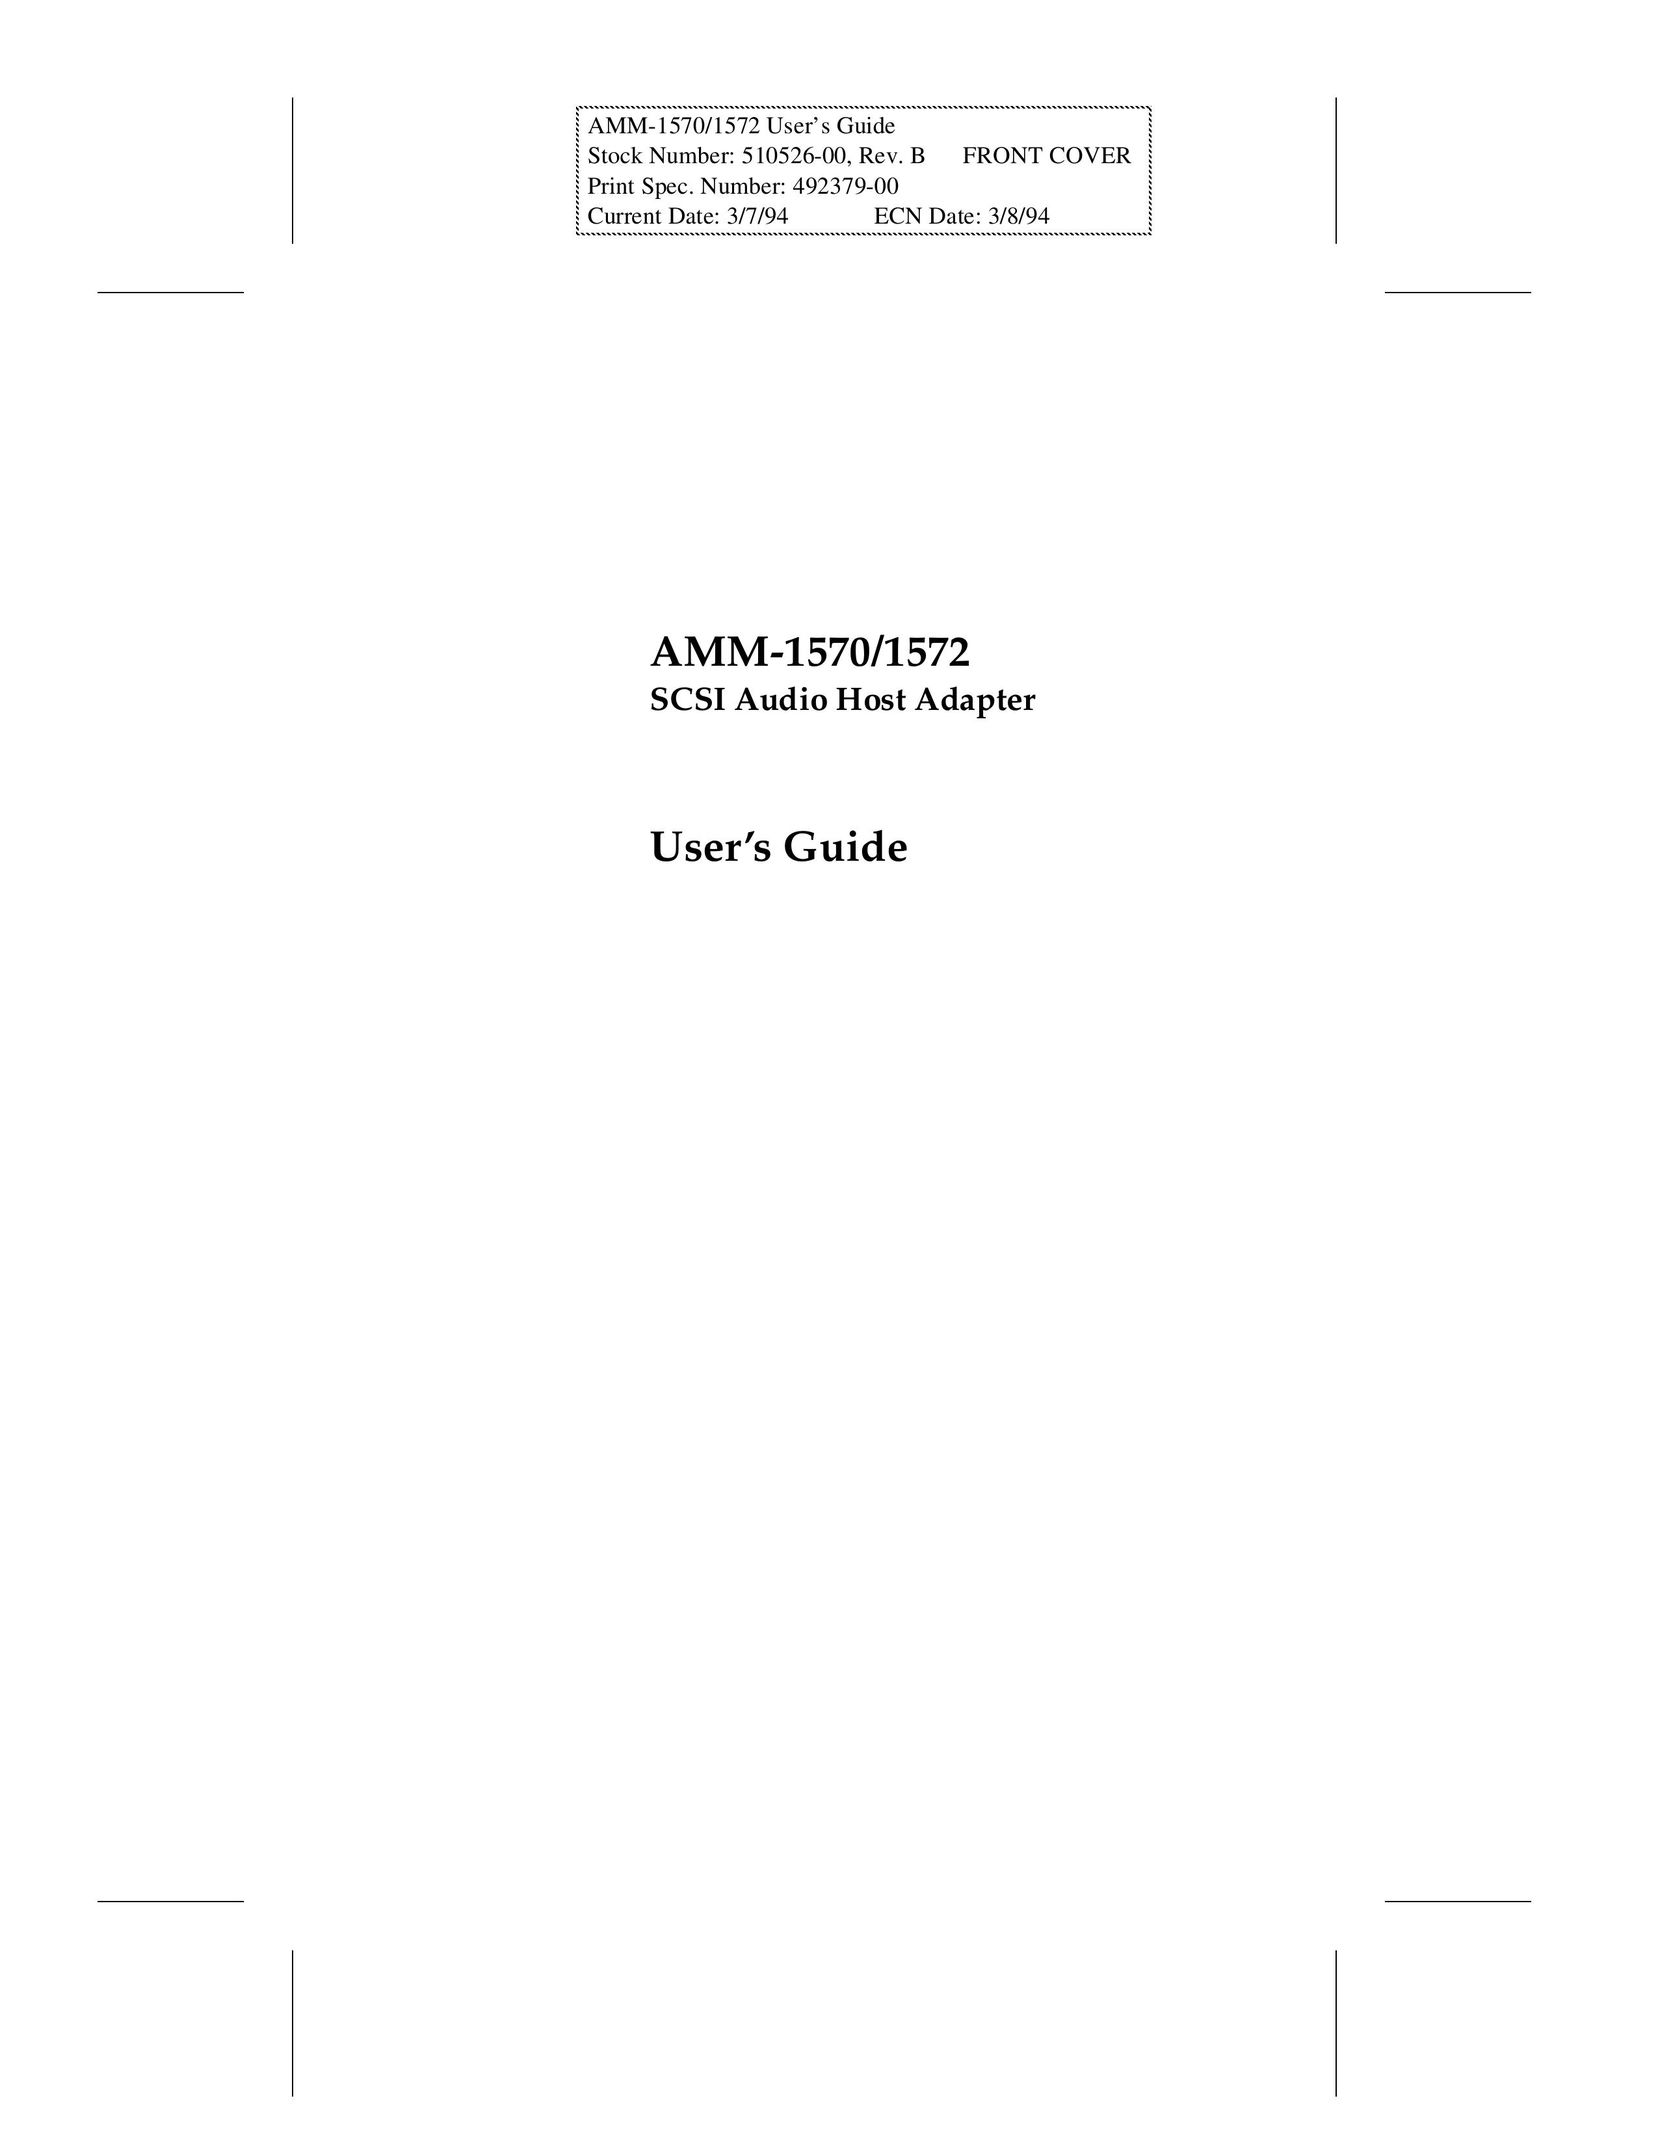 Adaptec AMM-1572 Network Card User Manual